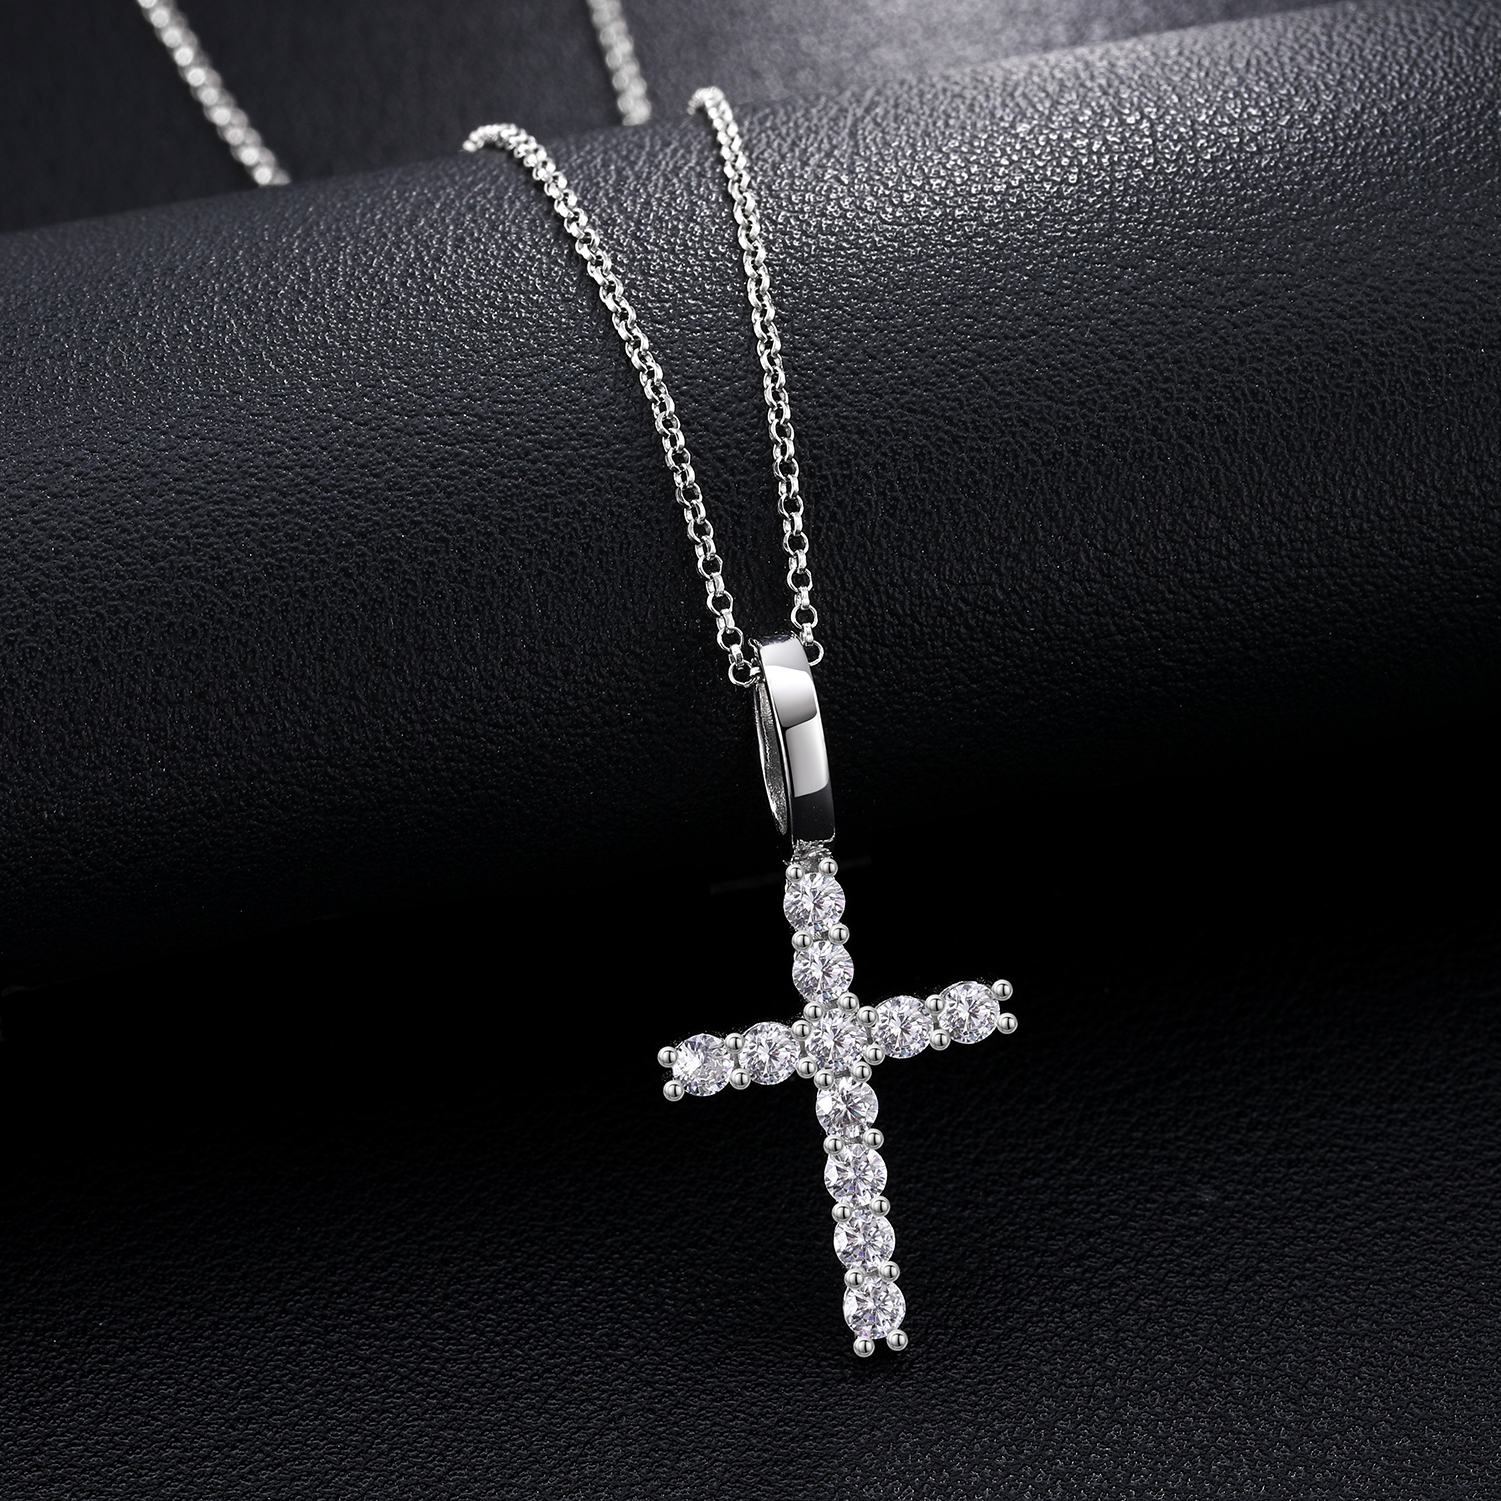 Exquisite Fashion 925 Sterling Silver Cross Pendant Moissanite Pendant Necklace For Men Women Hip Hop Jewelry Wholesale 2022 New